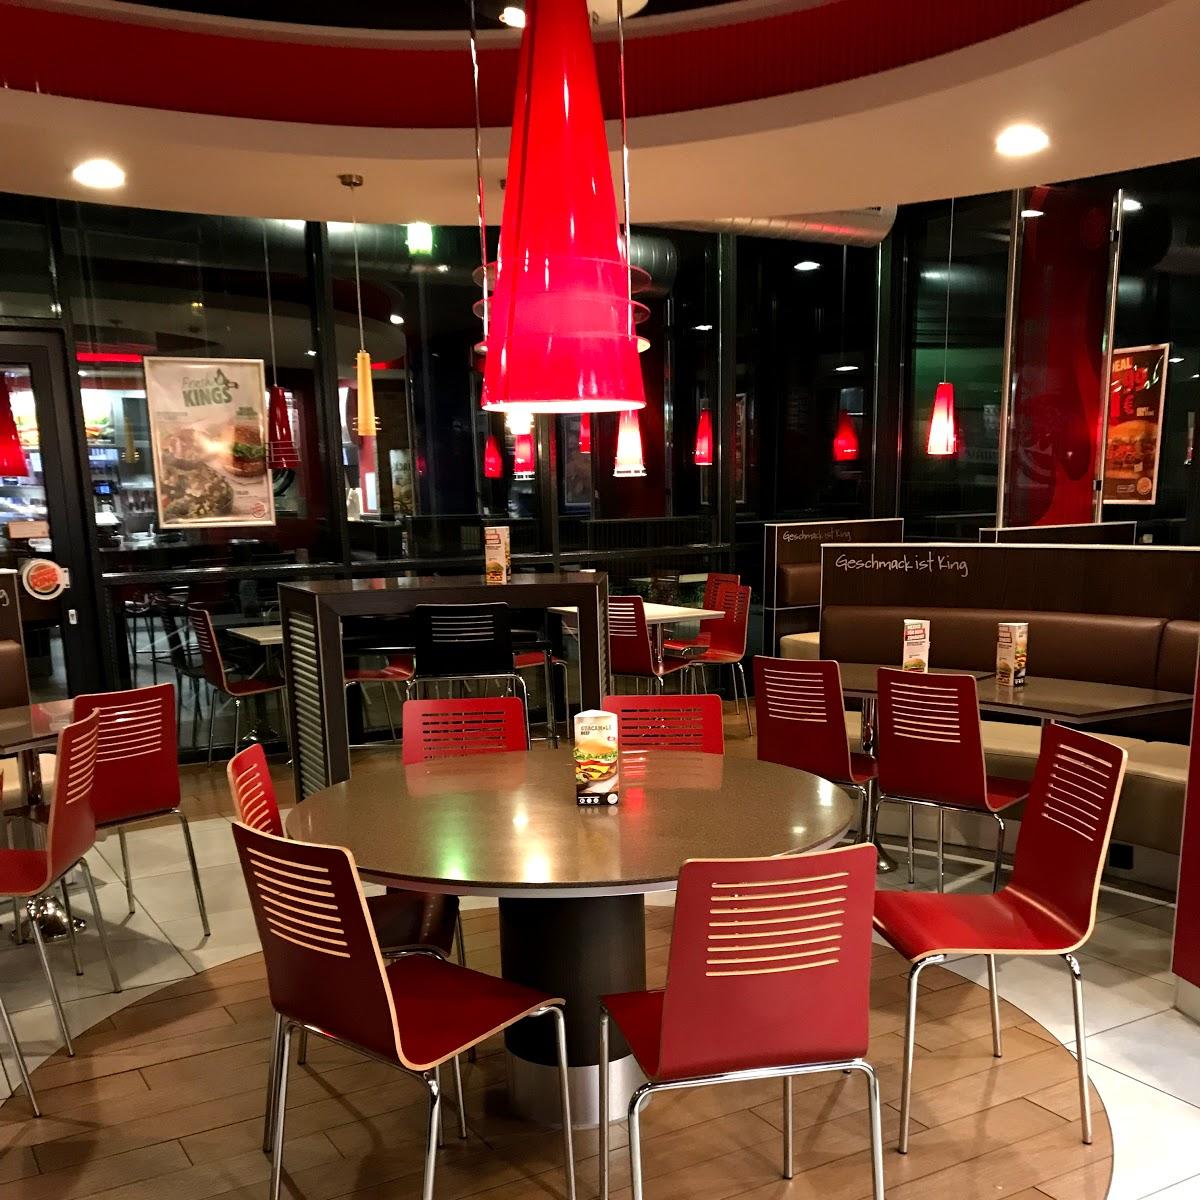 Restaurant "Burger King" in Hechingen